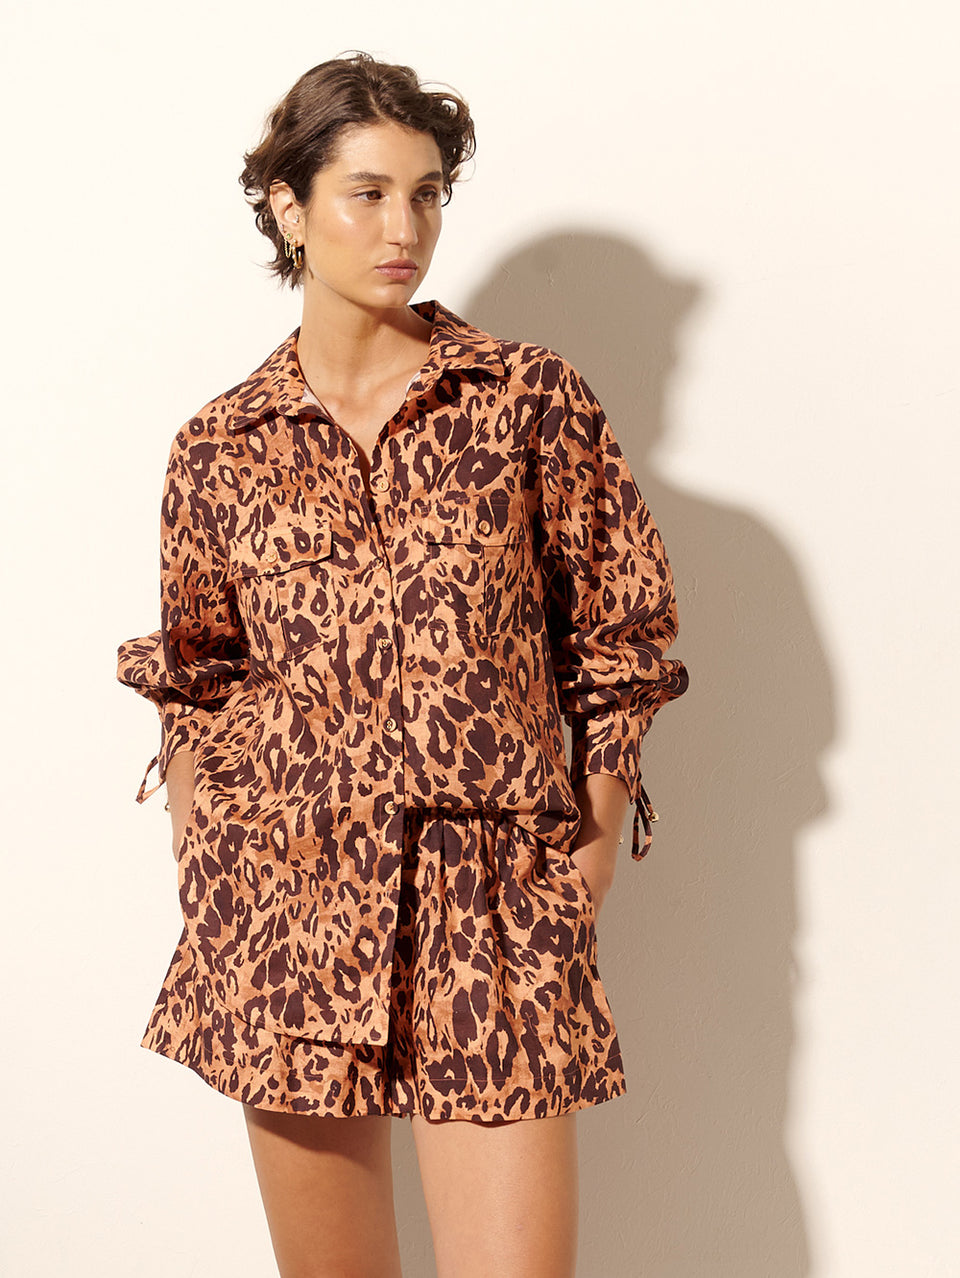 Madison Short KIVARI | Model wears orange and brown leopard short